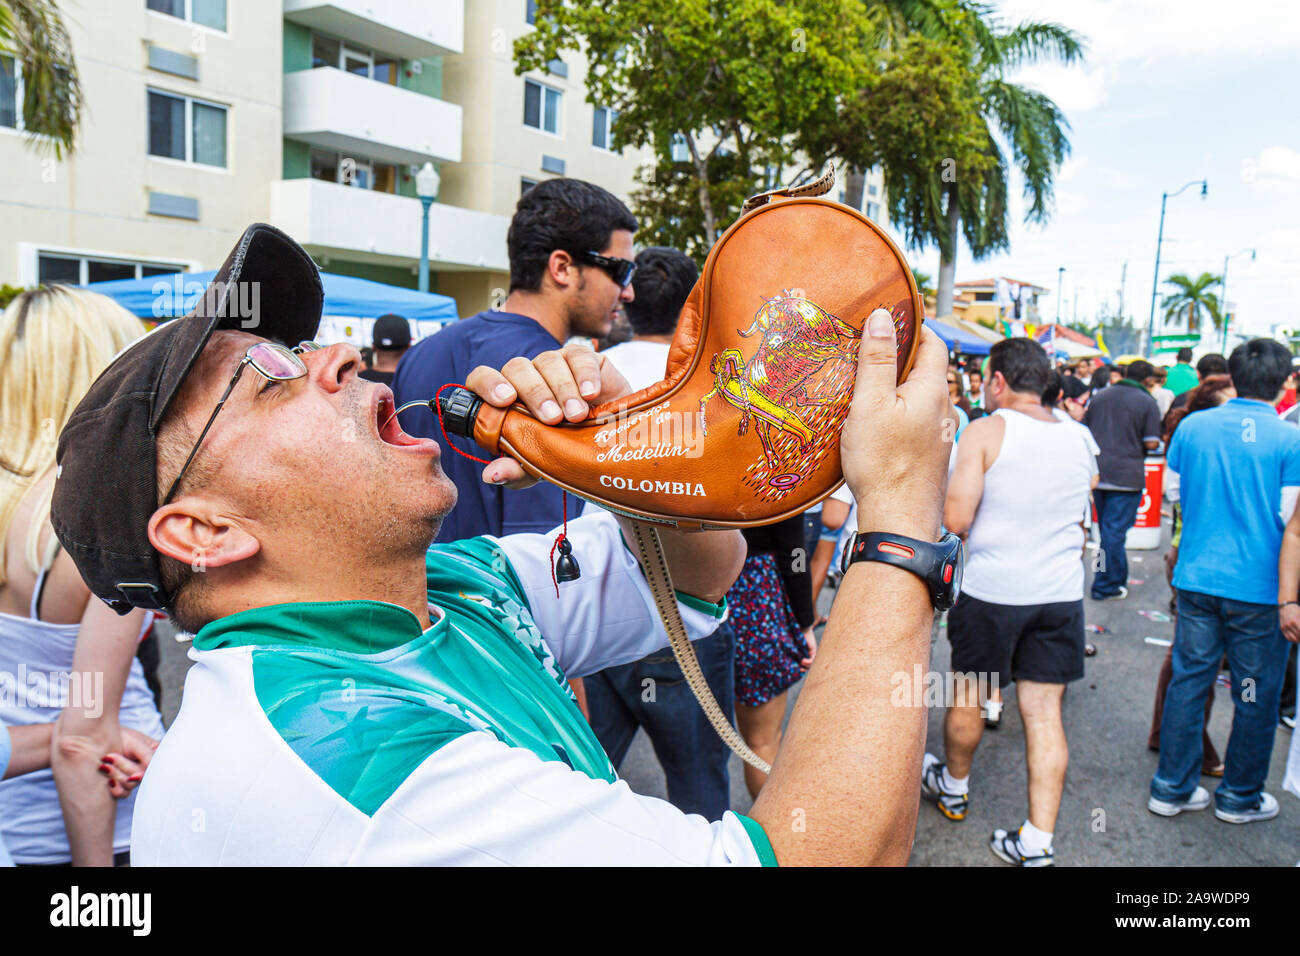 Miami Florida, Little Havana, Calle Ocho, Carnaval Miami, jährliches Hispanic-Festival, Erwachsene Erwachsene Männer Männer, Getränke Getränke Getränke Trinken, Visi Stockfoto